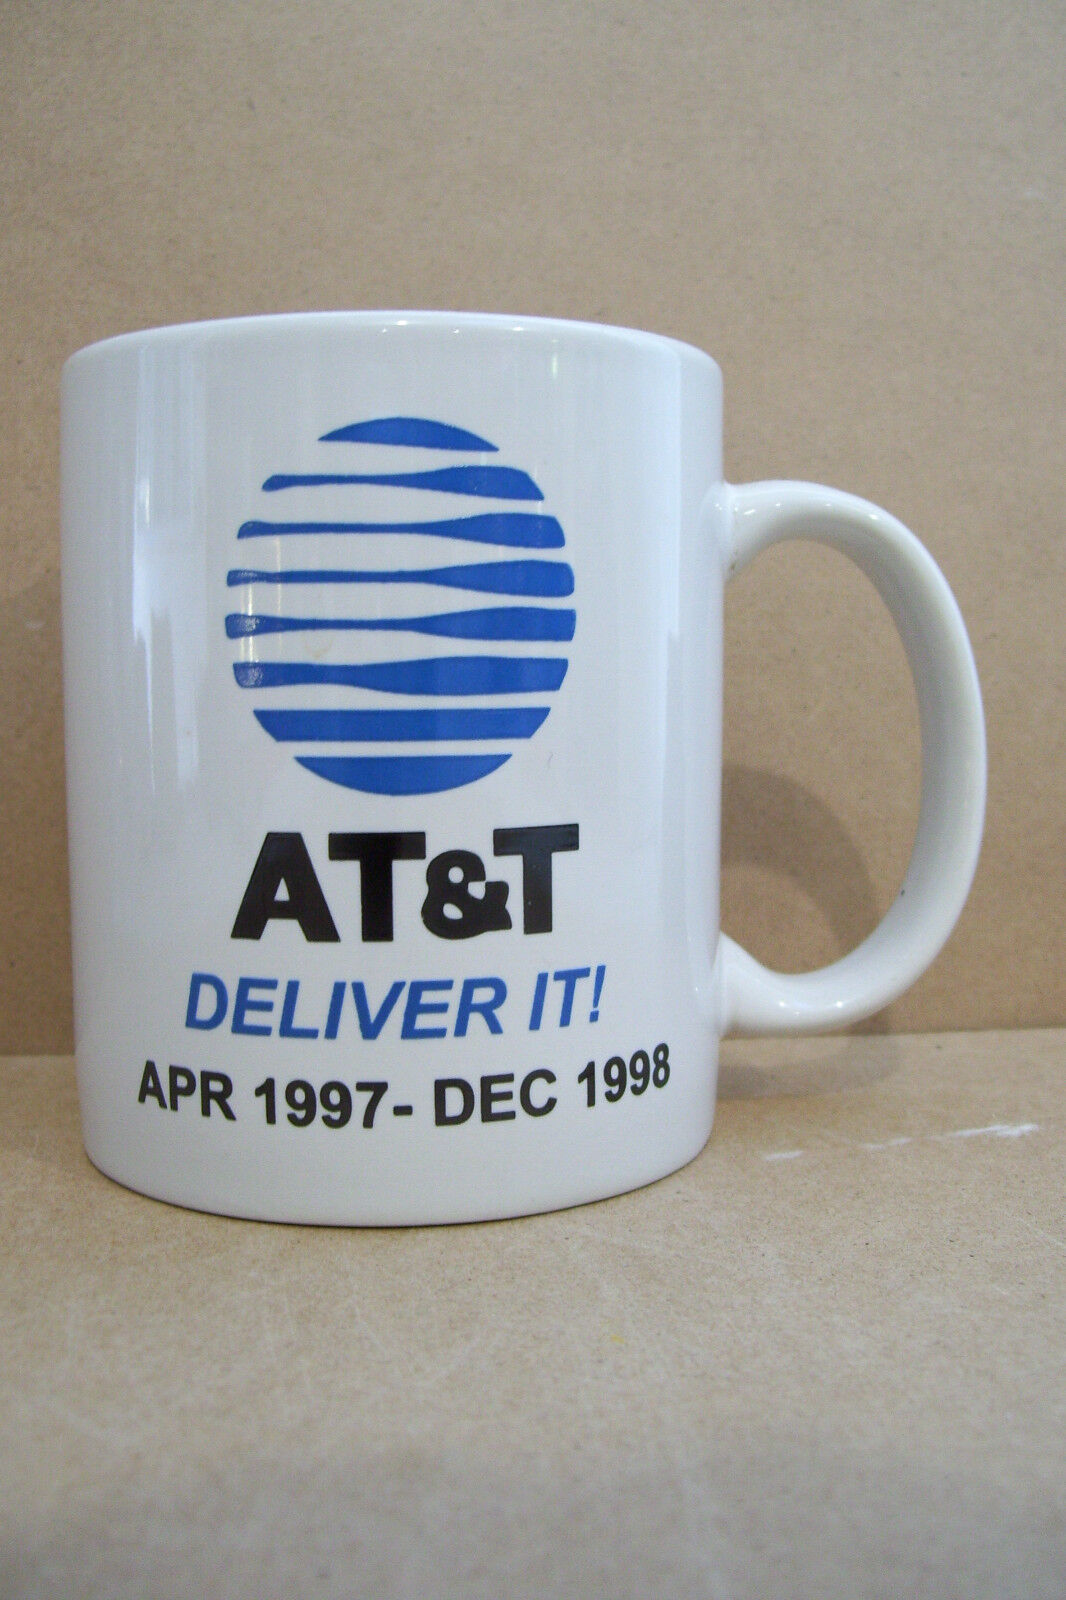  AT&T Deliver It Mug Cup April 1977-December 1998 Collectible Souvenir